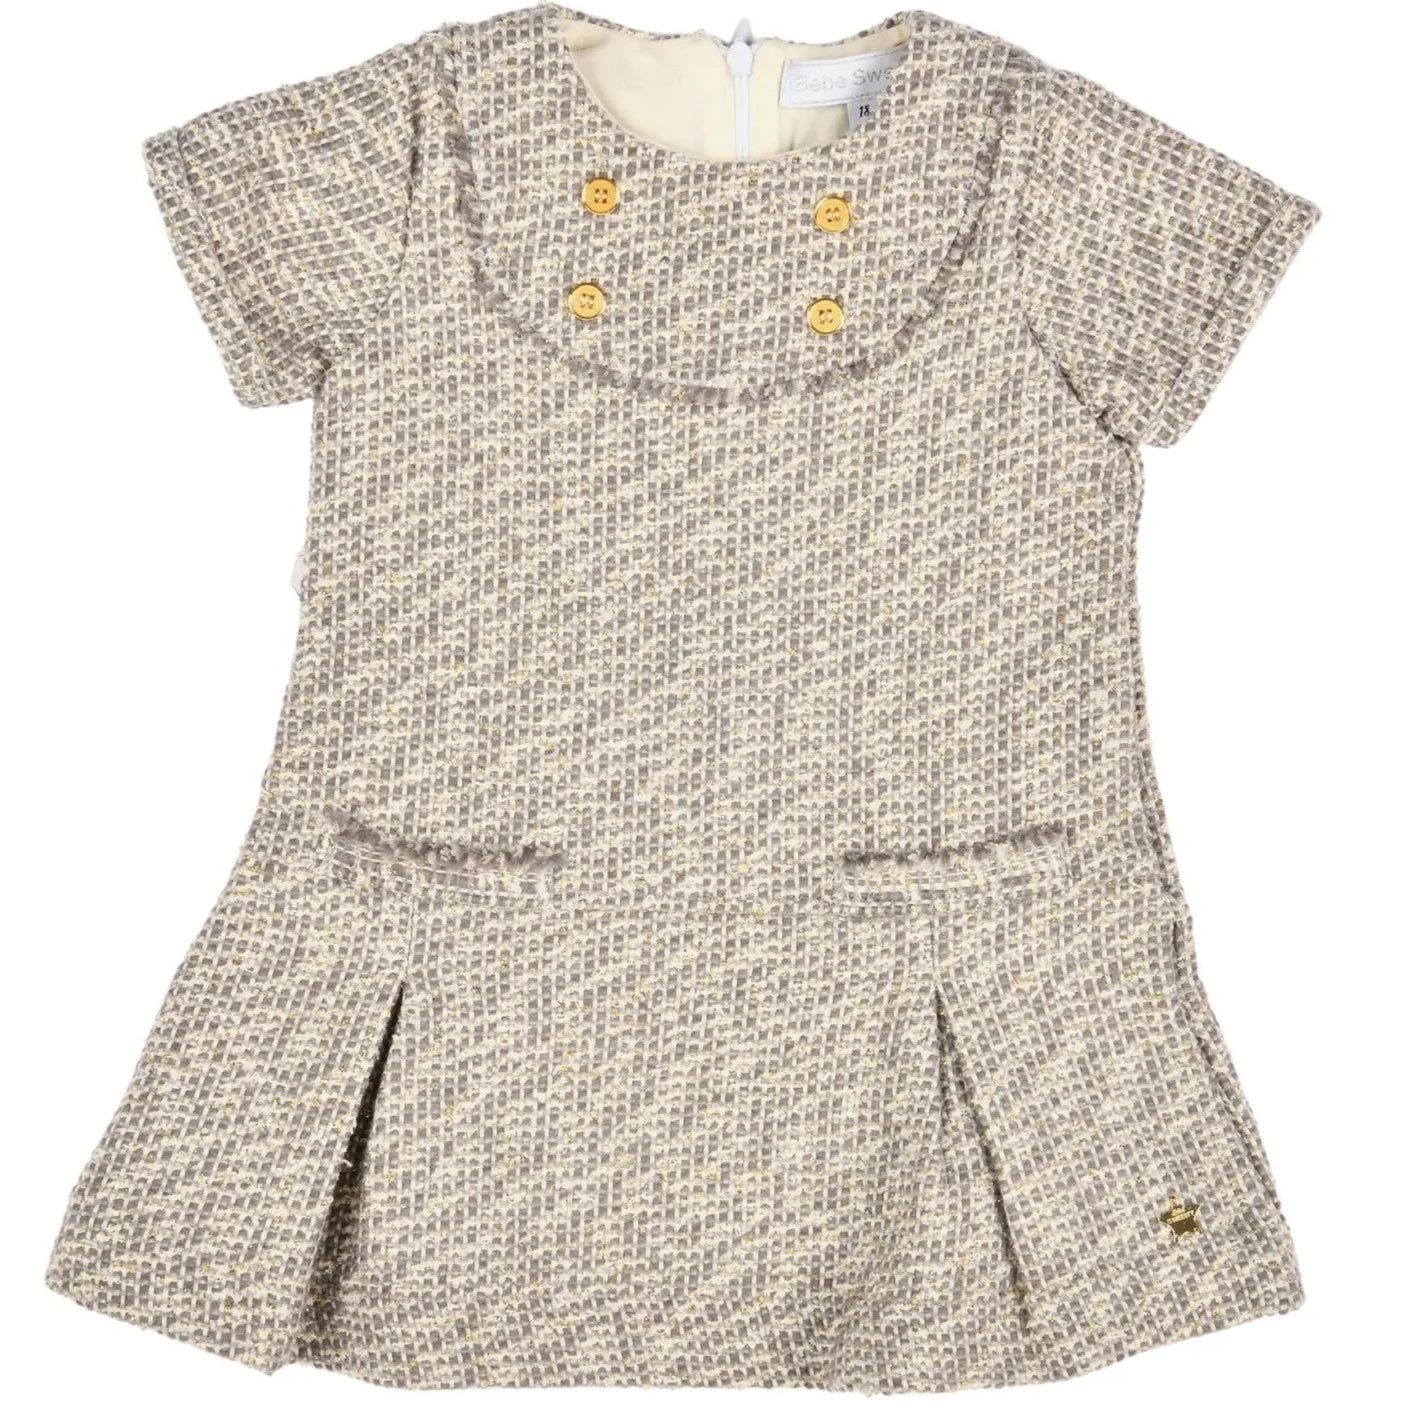 Bébé Sweeny Bridgette Dress in Grey/ Pink & Gold Tweed for Baby Girls 18 m - 4Y - CapuletKids